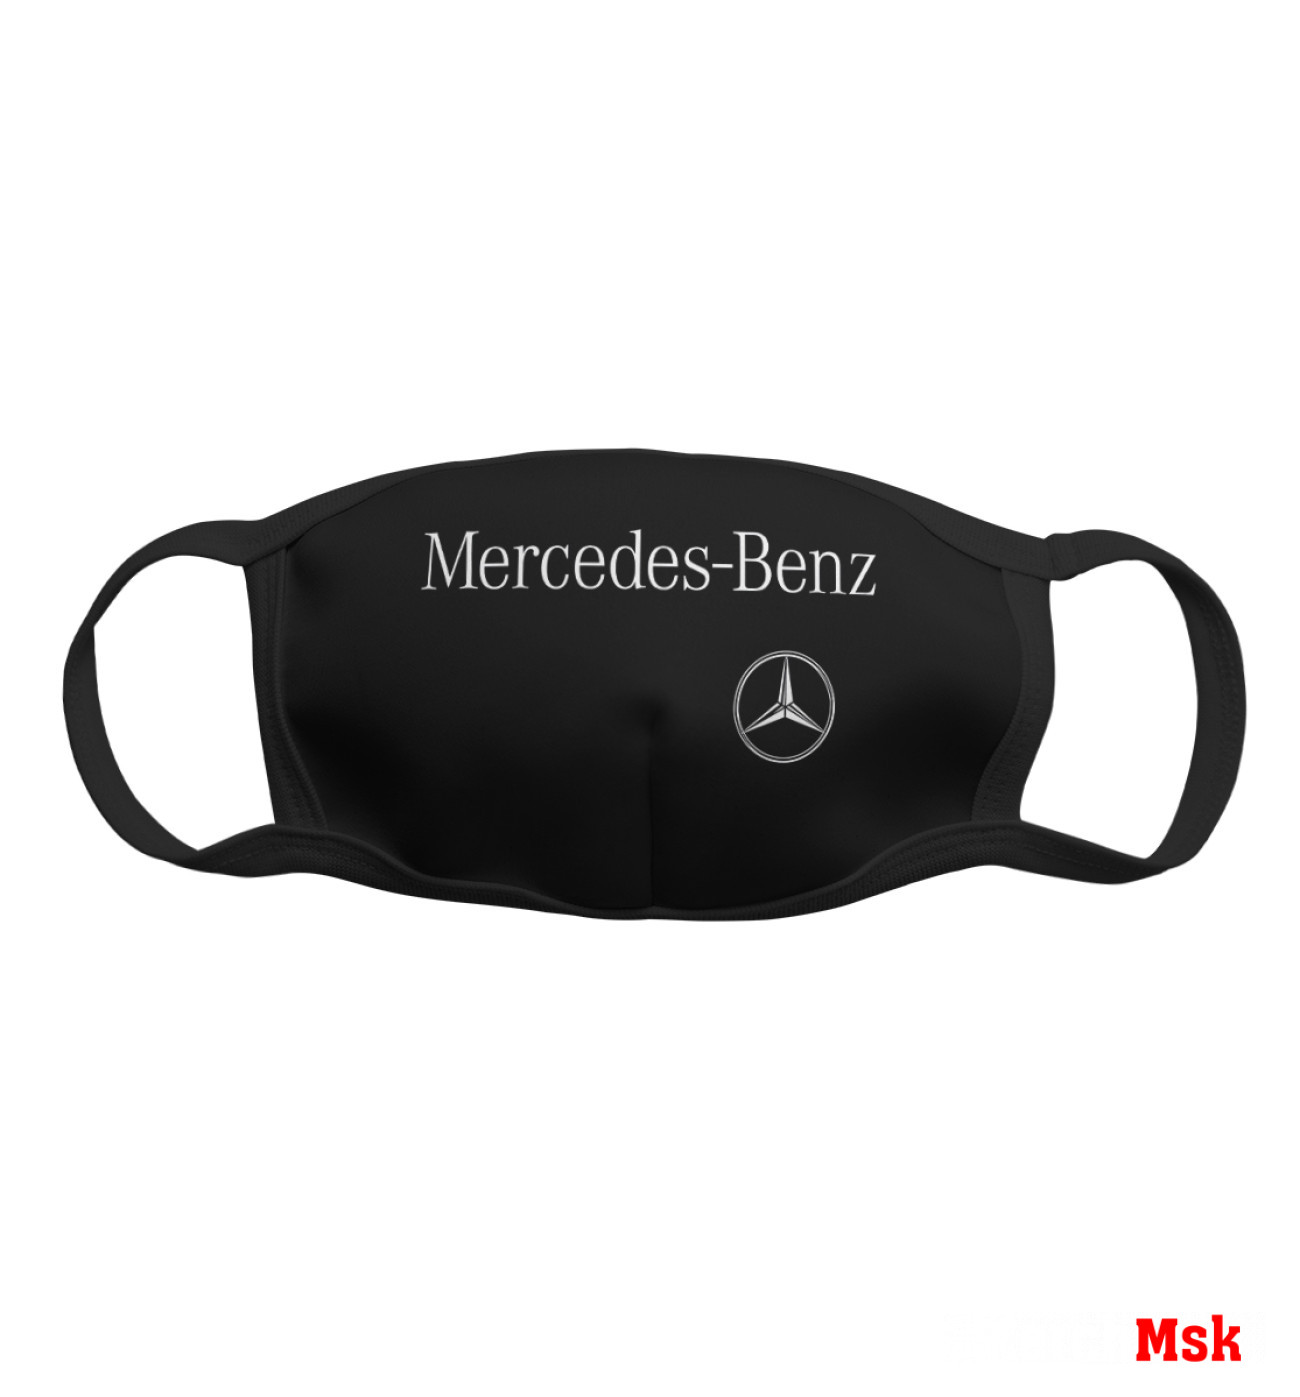 Мужская Маска Mercedes-Benz, артикул: MER-175096-msk-2